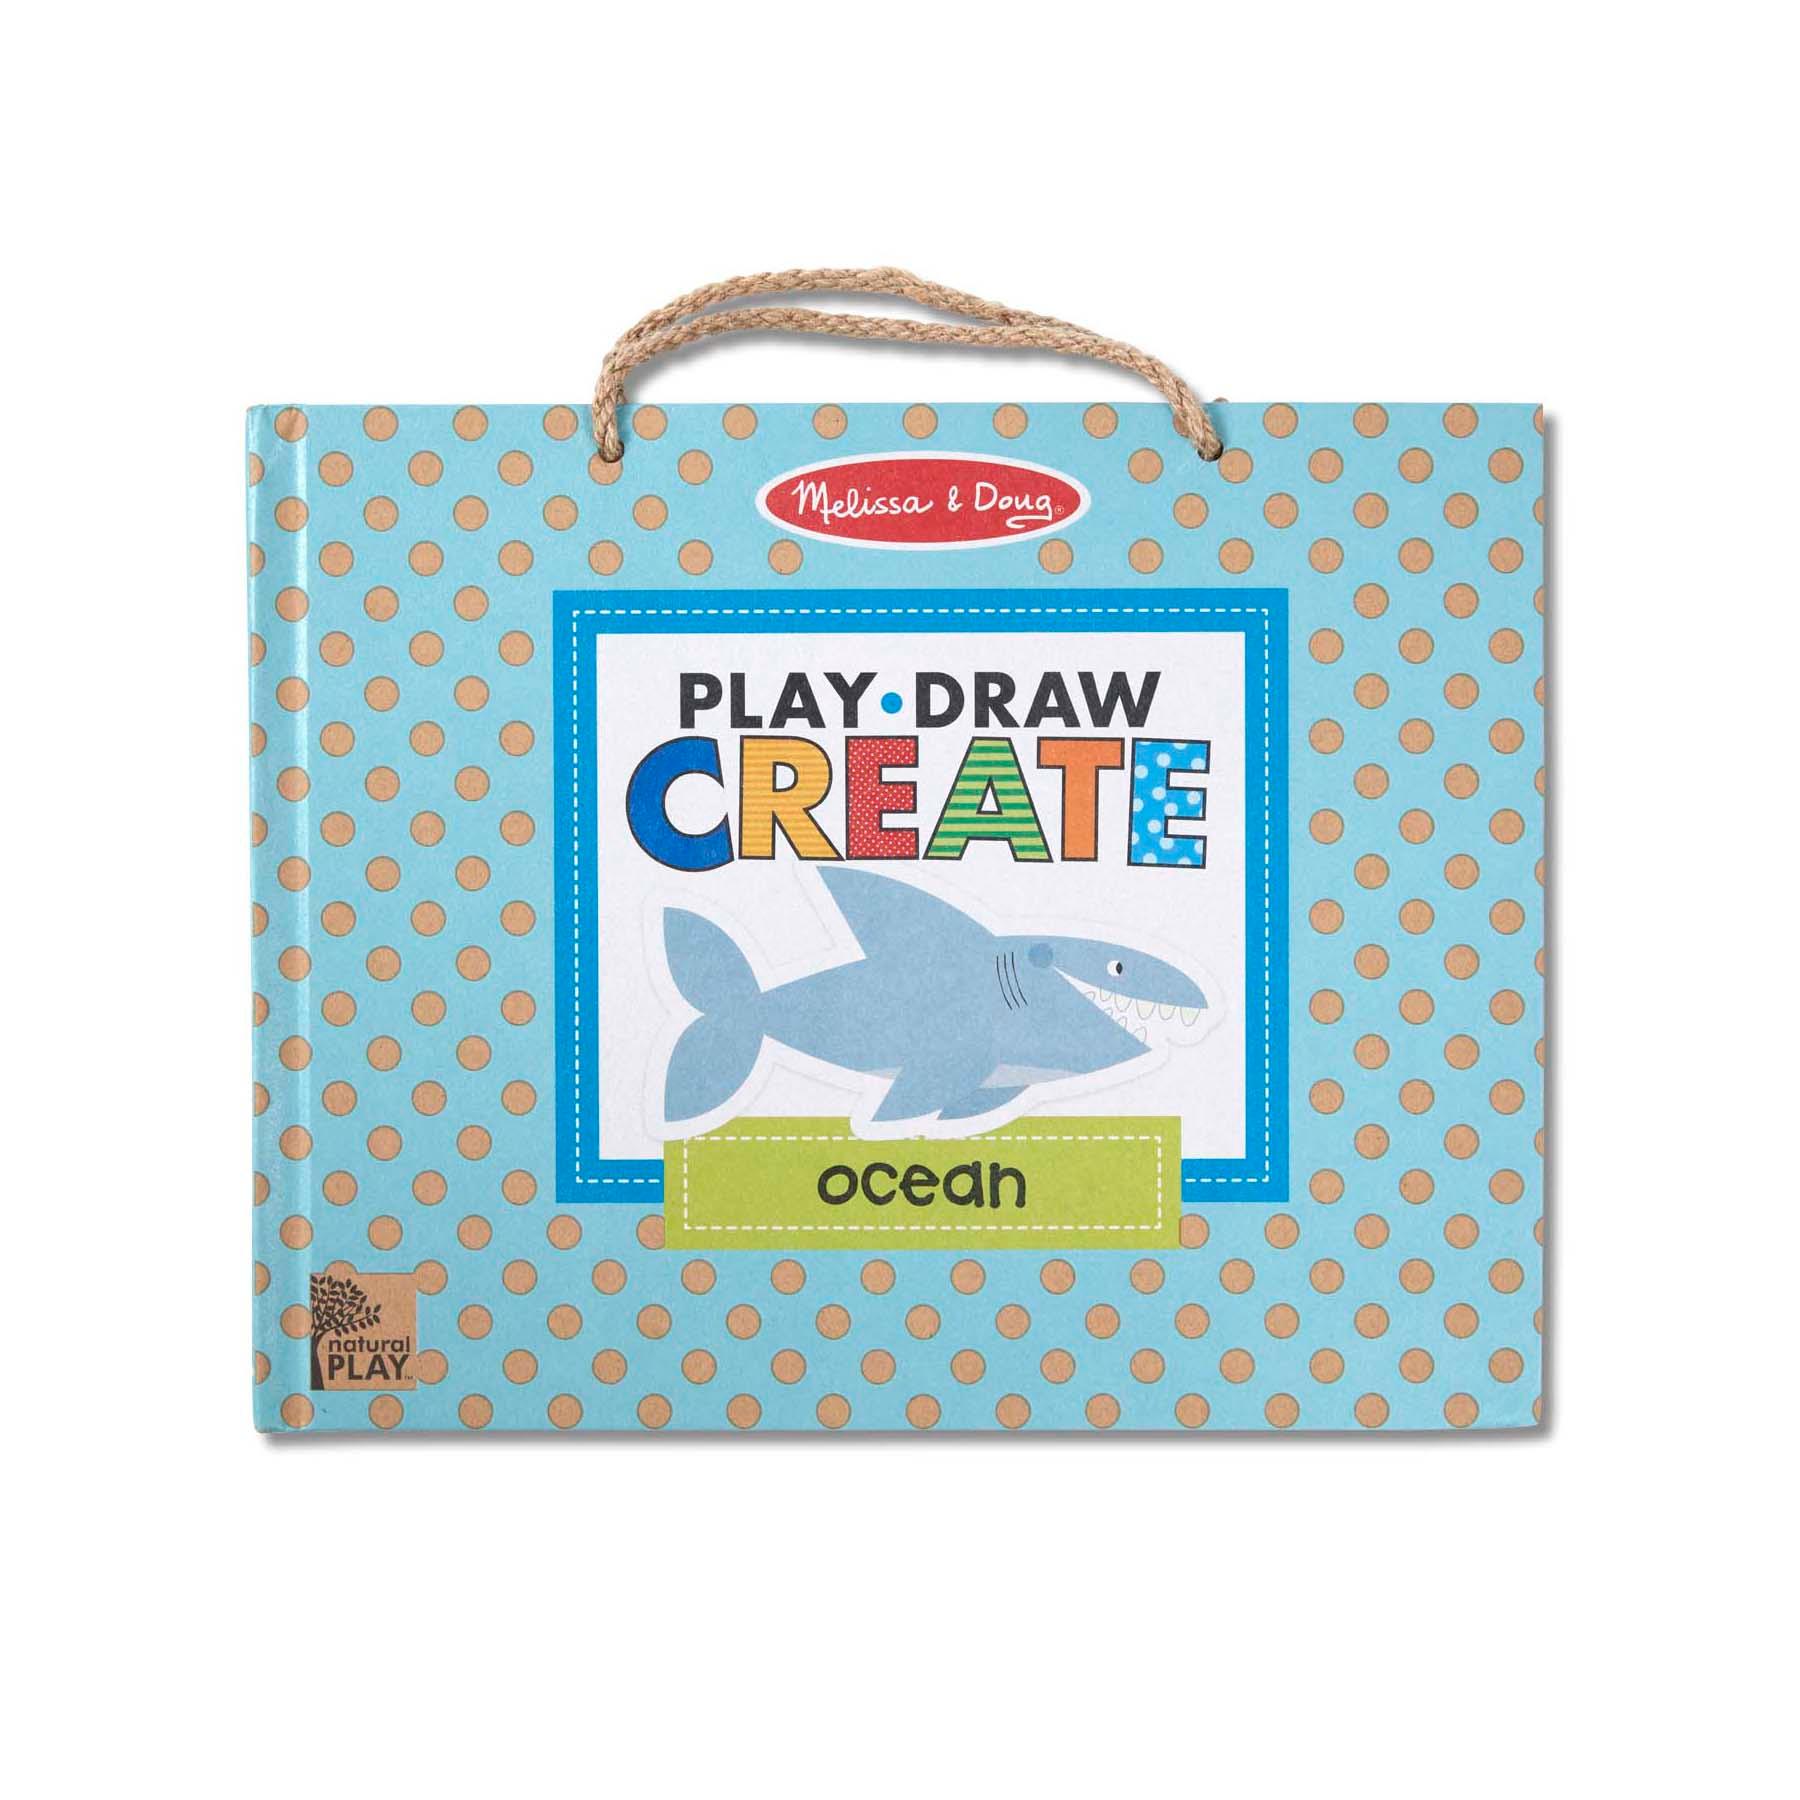 Natural Play: Play, Draw, Create Reusable Drawing & Magnet Kit - Ocean - Loomini